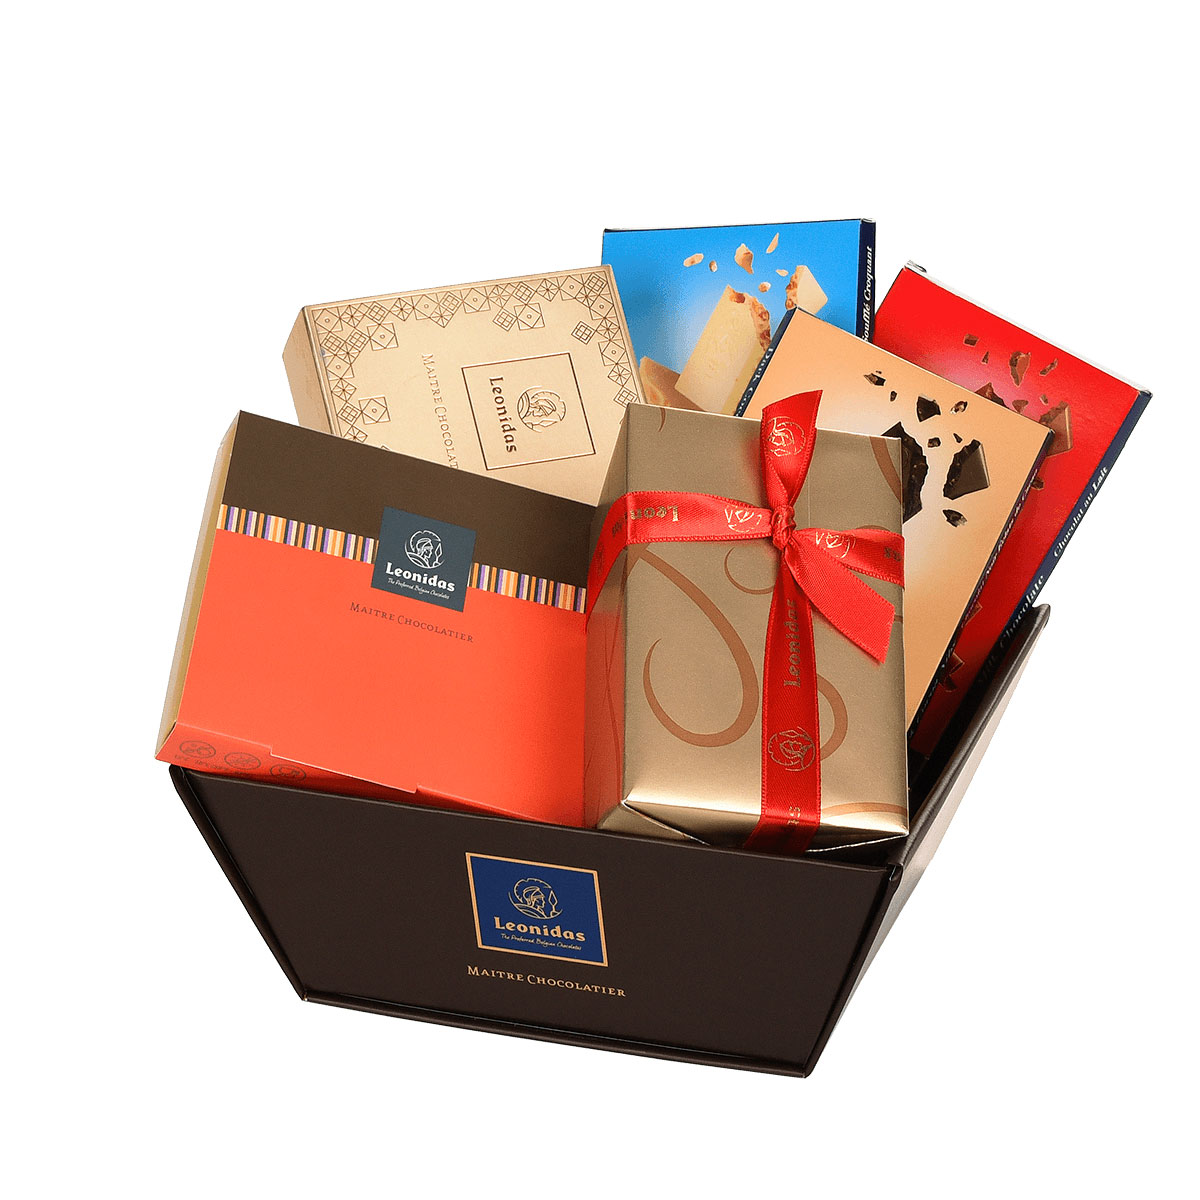 Greeting Card 'Merci BEAUCOUP' - Leonidas Online Shop Gistel (BE)